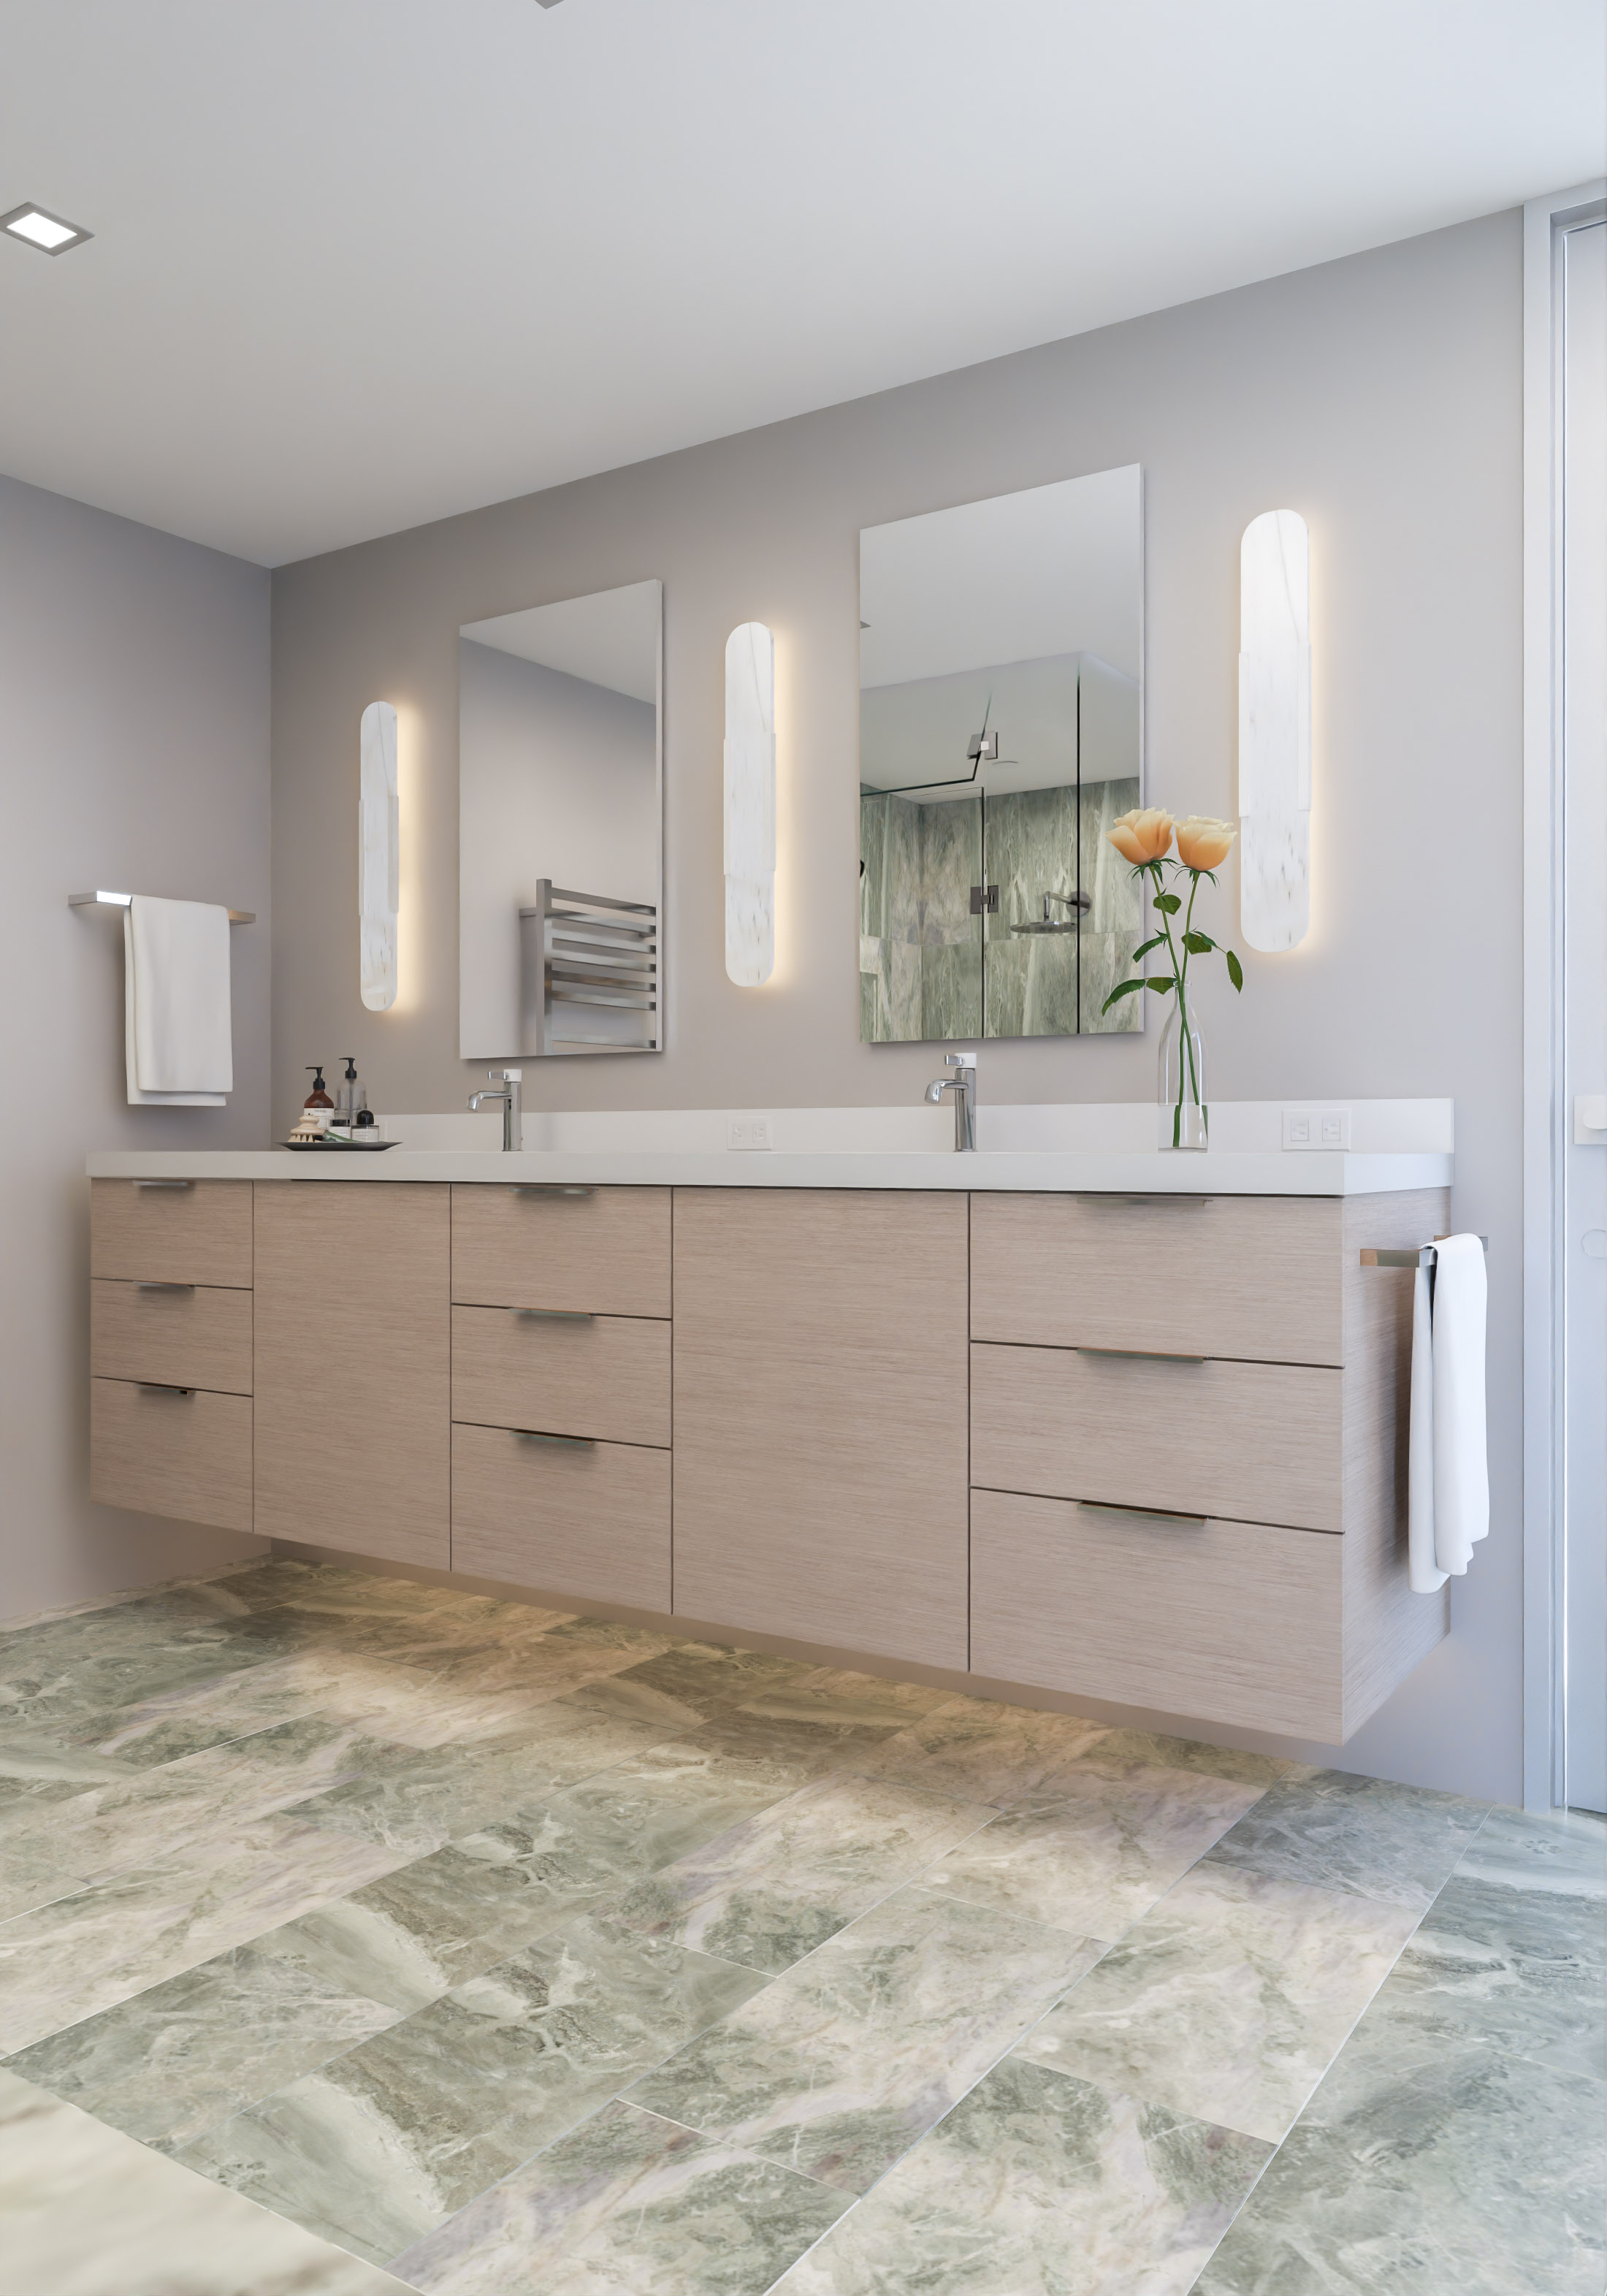 Bathroom vanity with single medicine cabinets and alabaster wall sconces